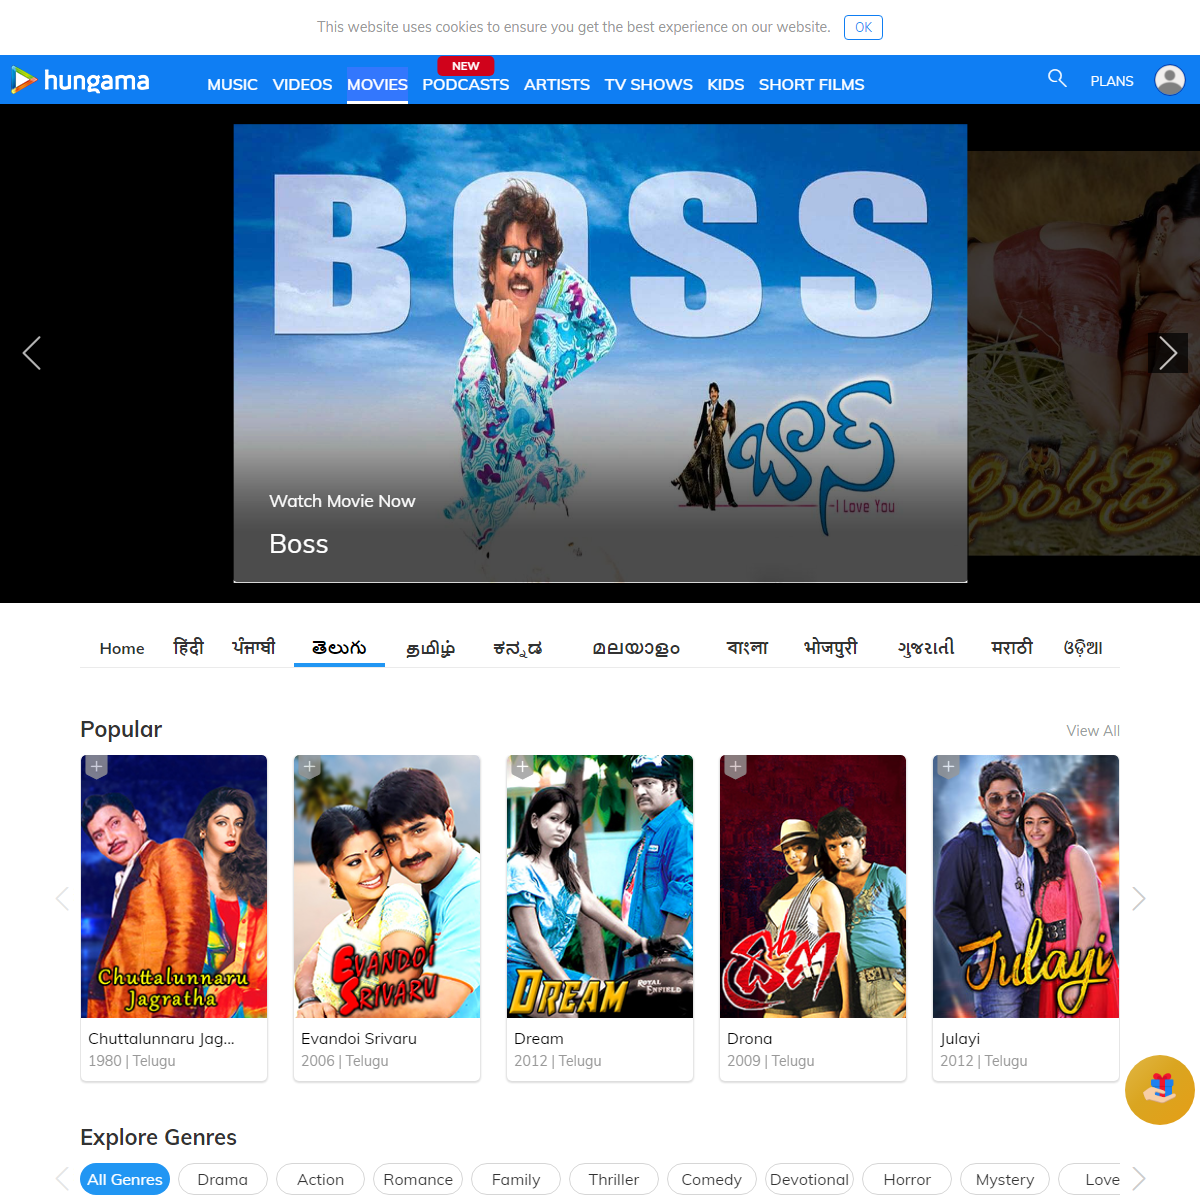 Download Latest Telugu Movies Online - Watch New Telugu Movies Free Online - List of Telugu Movies - Hungama